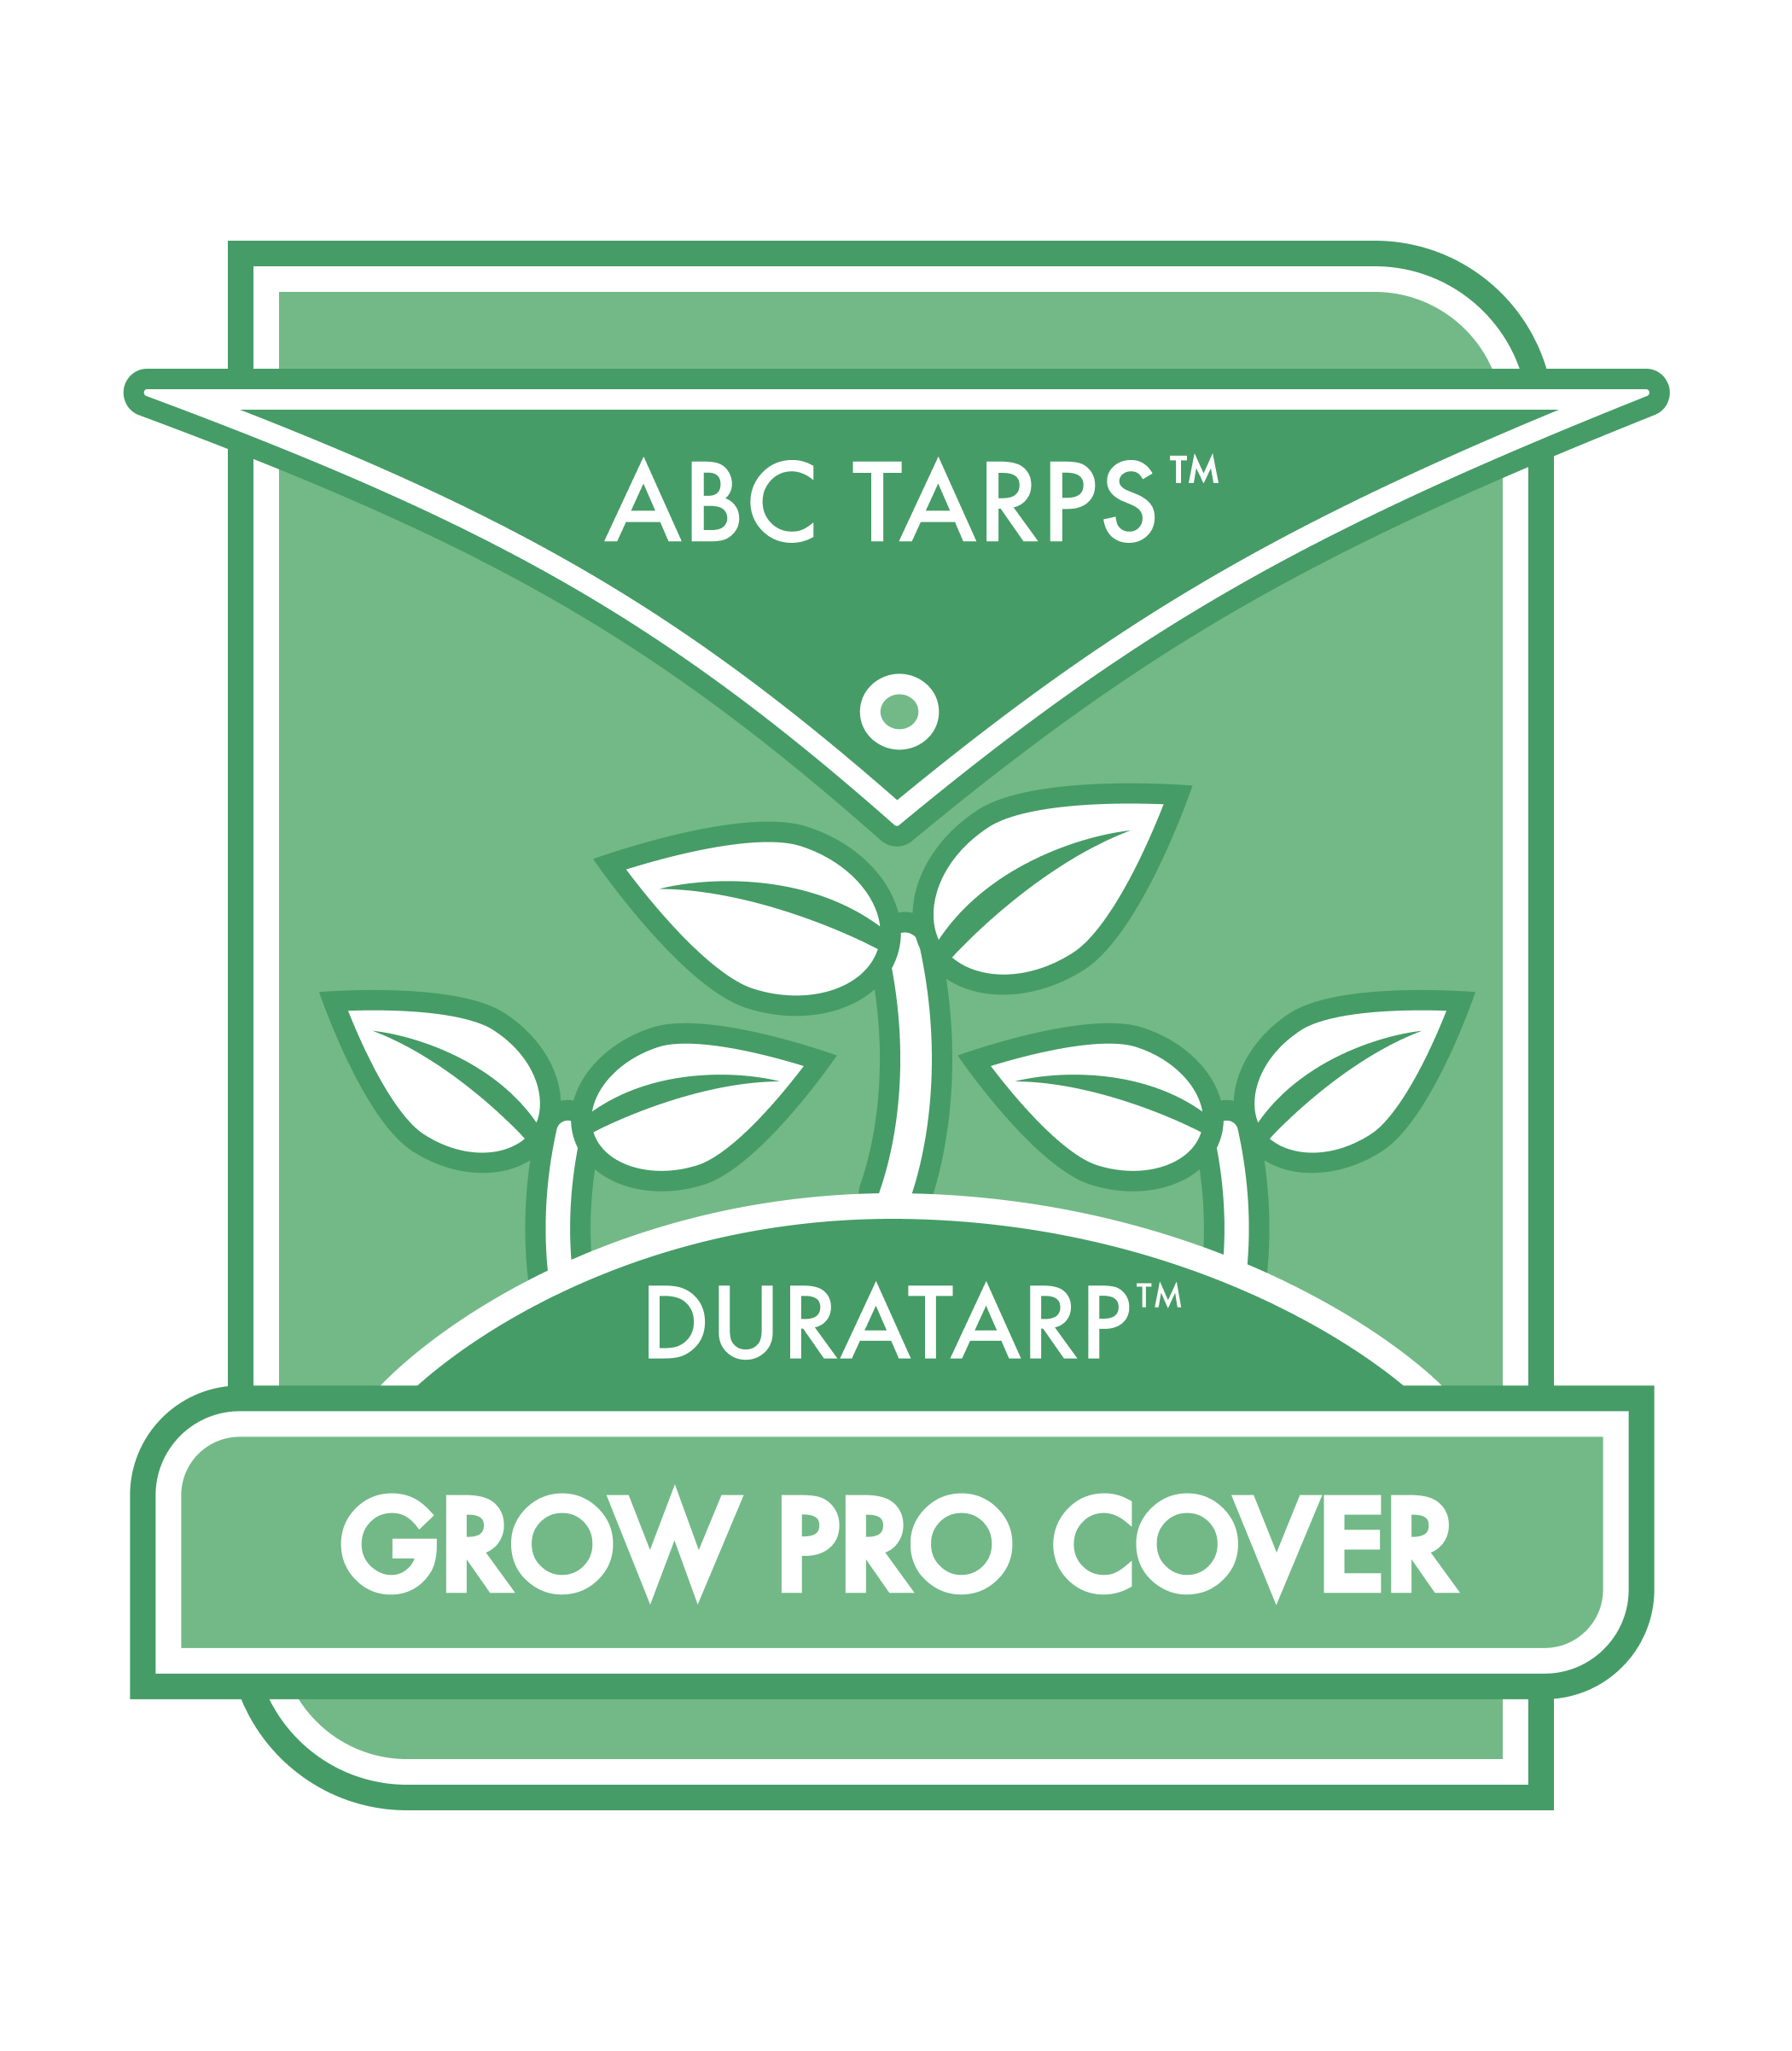 Duratarp Grow Pro Cover by ABC Tarps